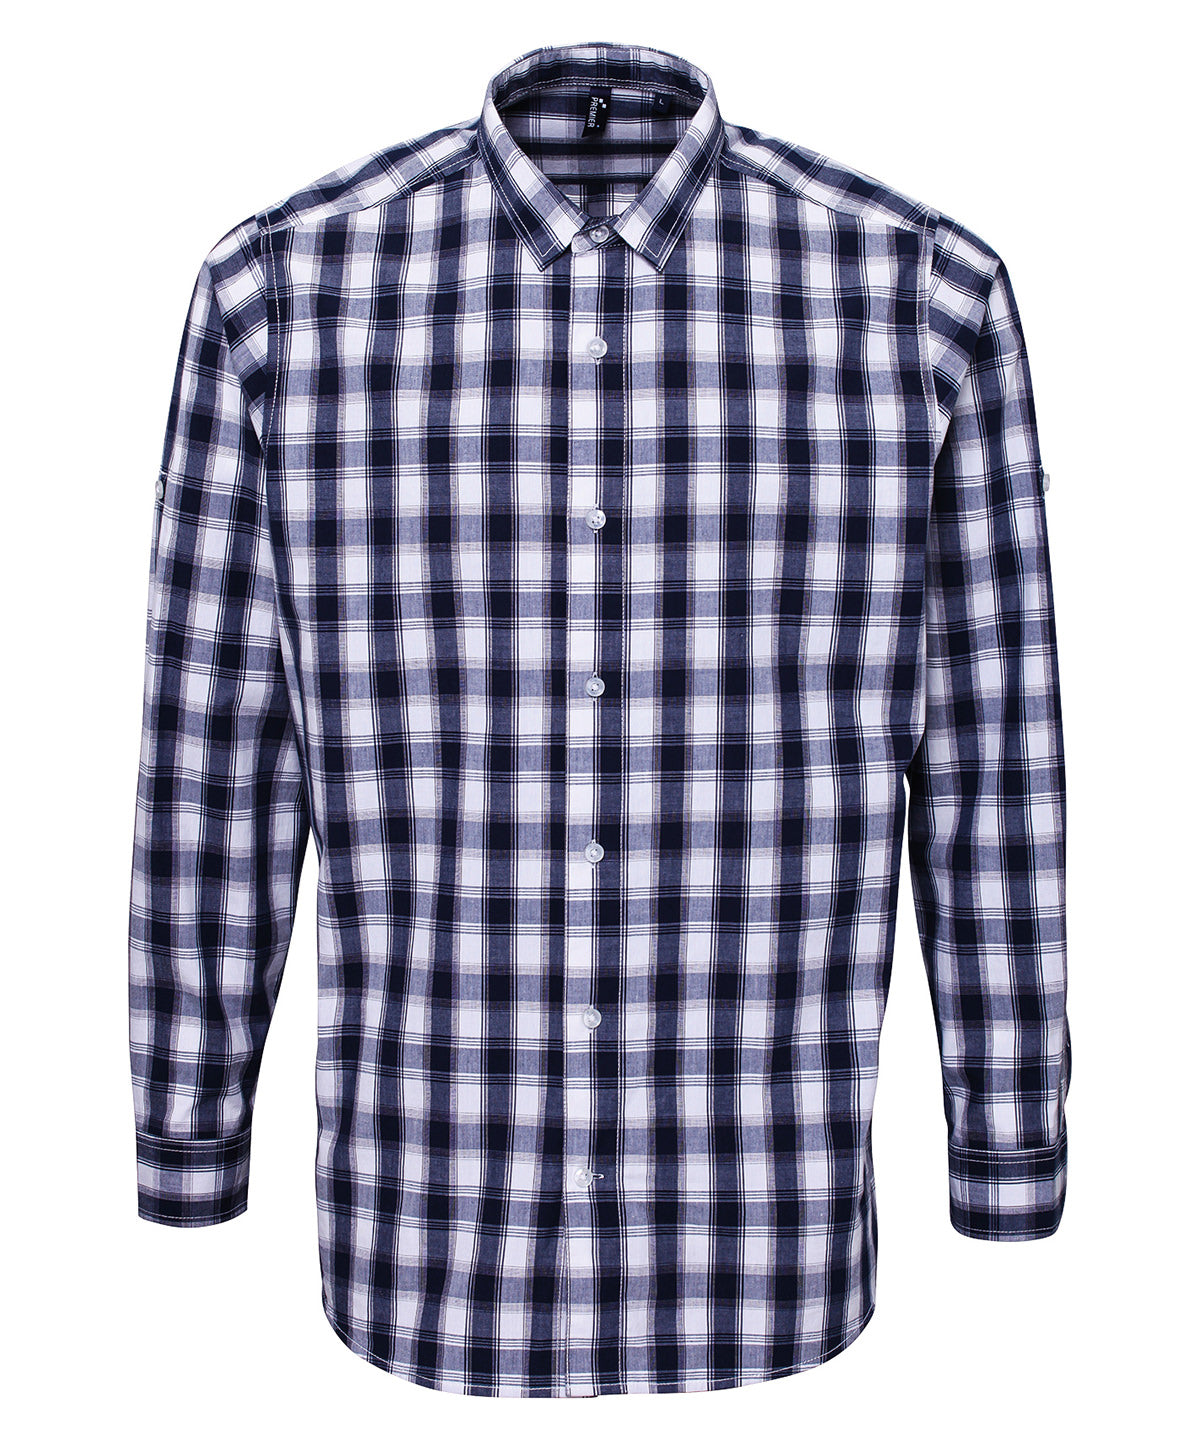 Bolir - Mulligan Check Cotton Long Sleeve Shirt